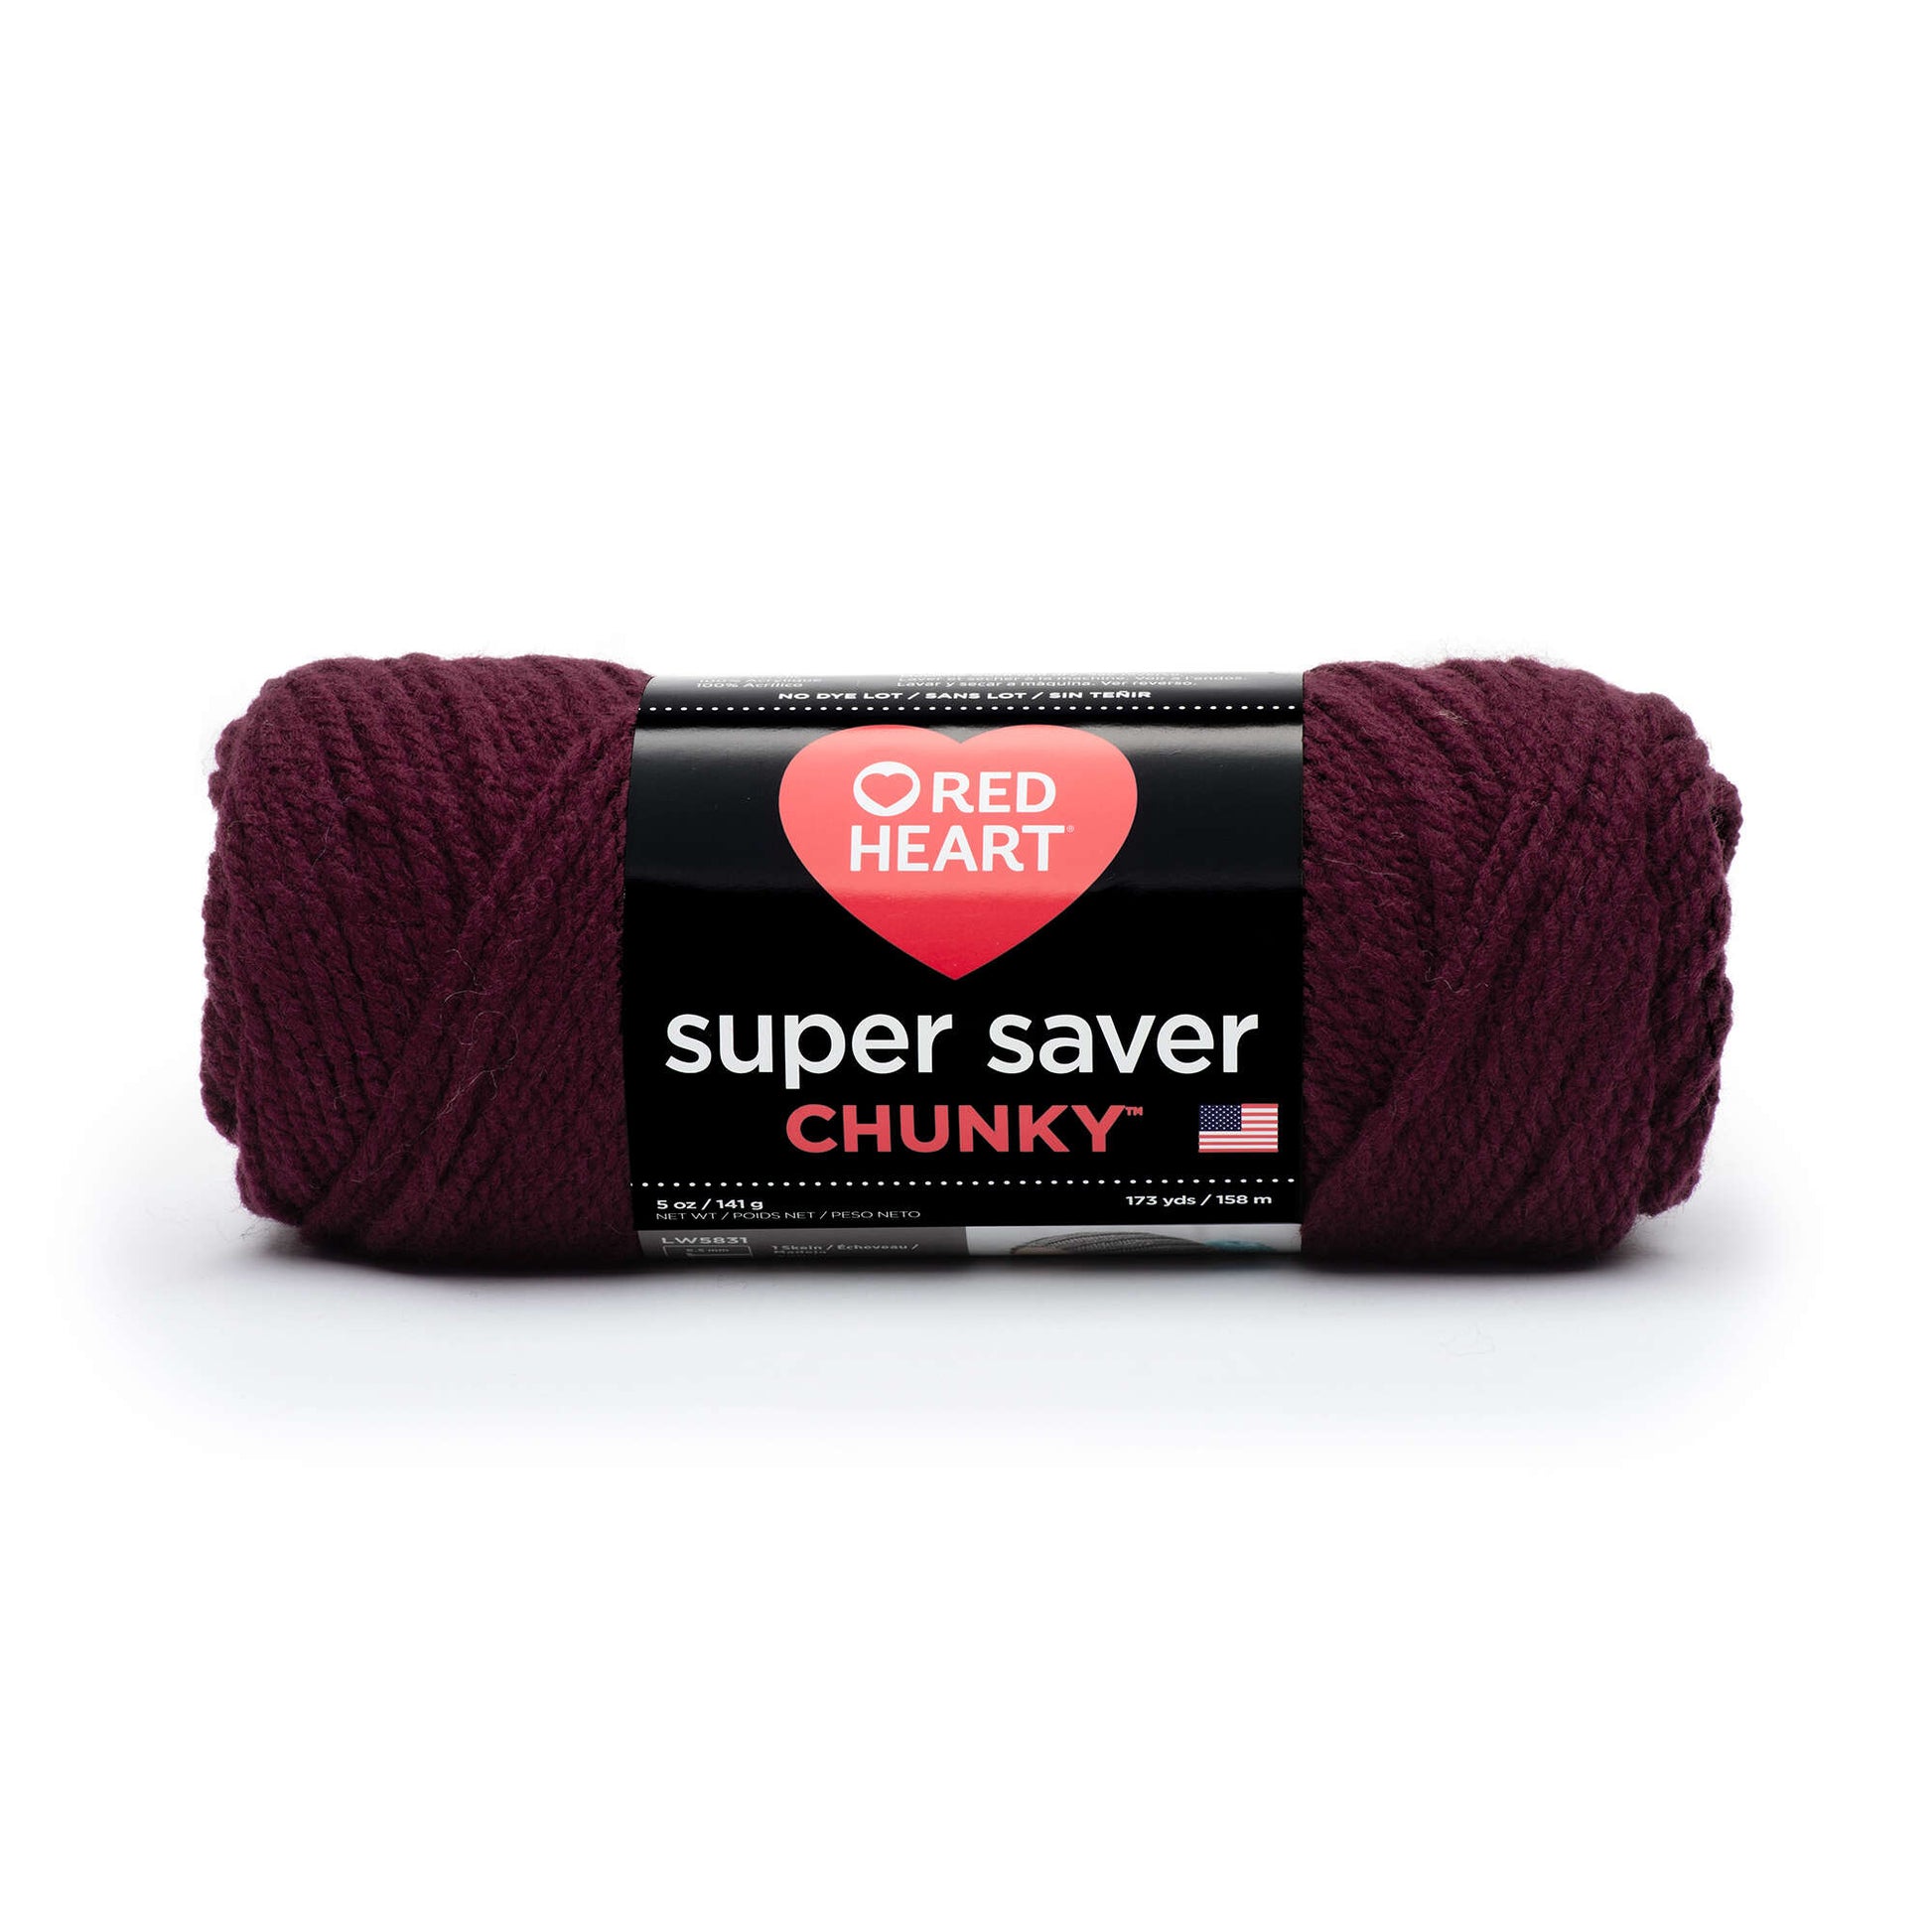 Red Heart Super Saver Jumbo Yarn - Clearance Shades* - Light Blue